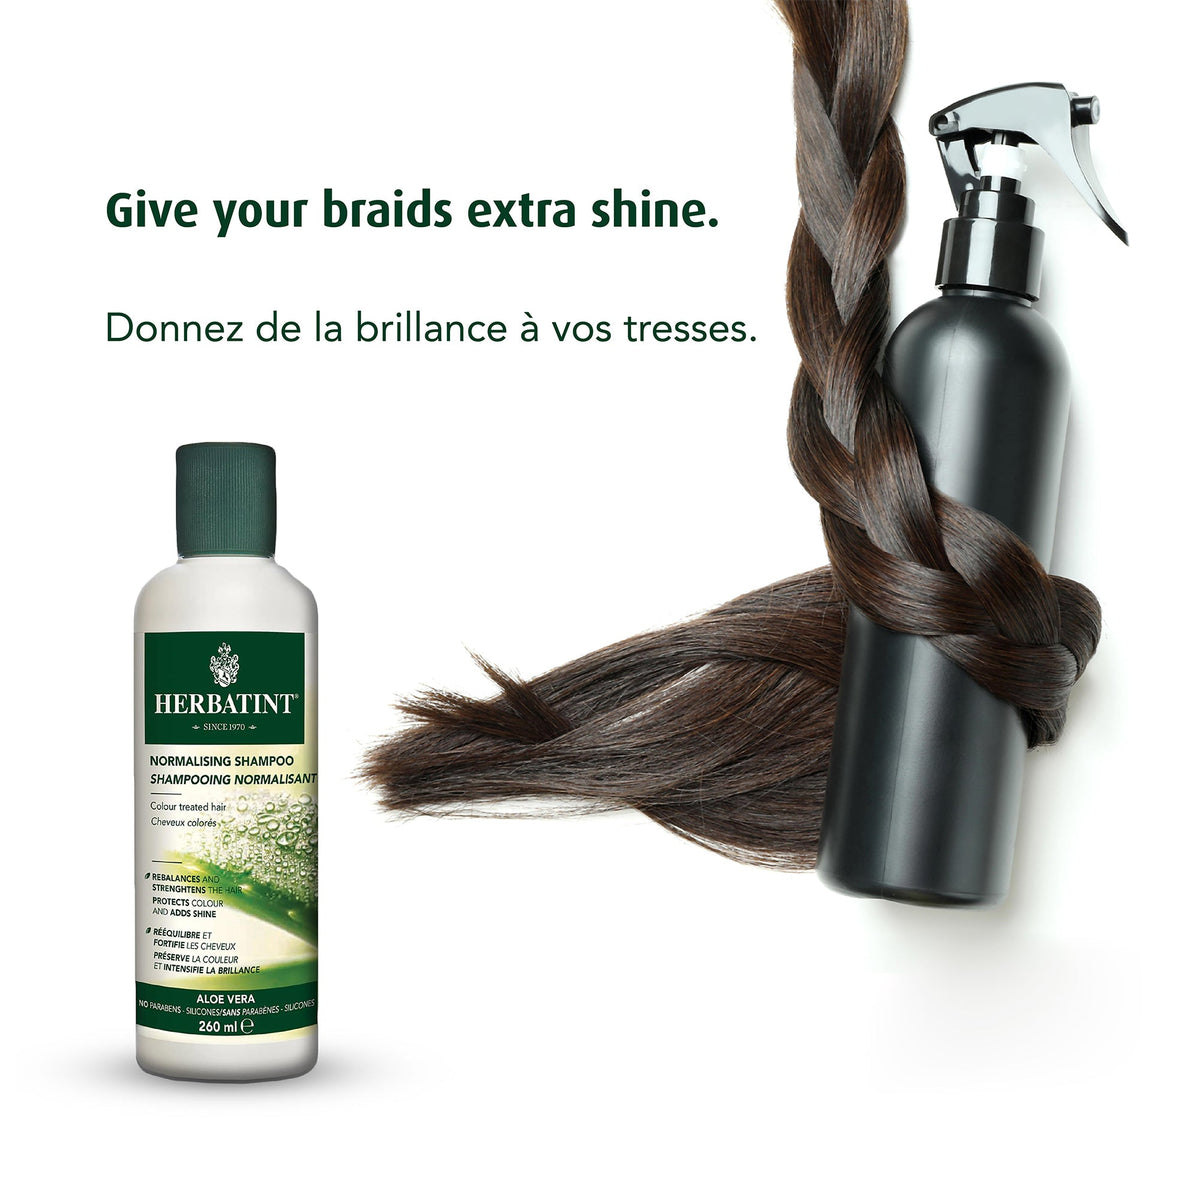 Normalizing Shampoo Herbatint 260 mL - A.Vogel Canada